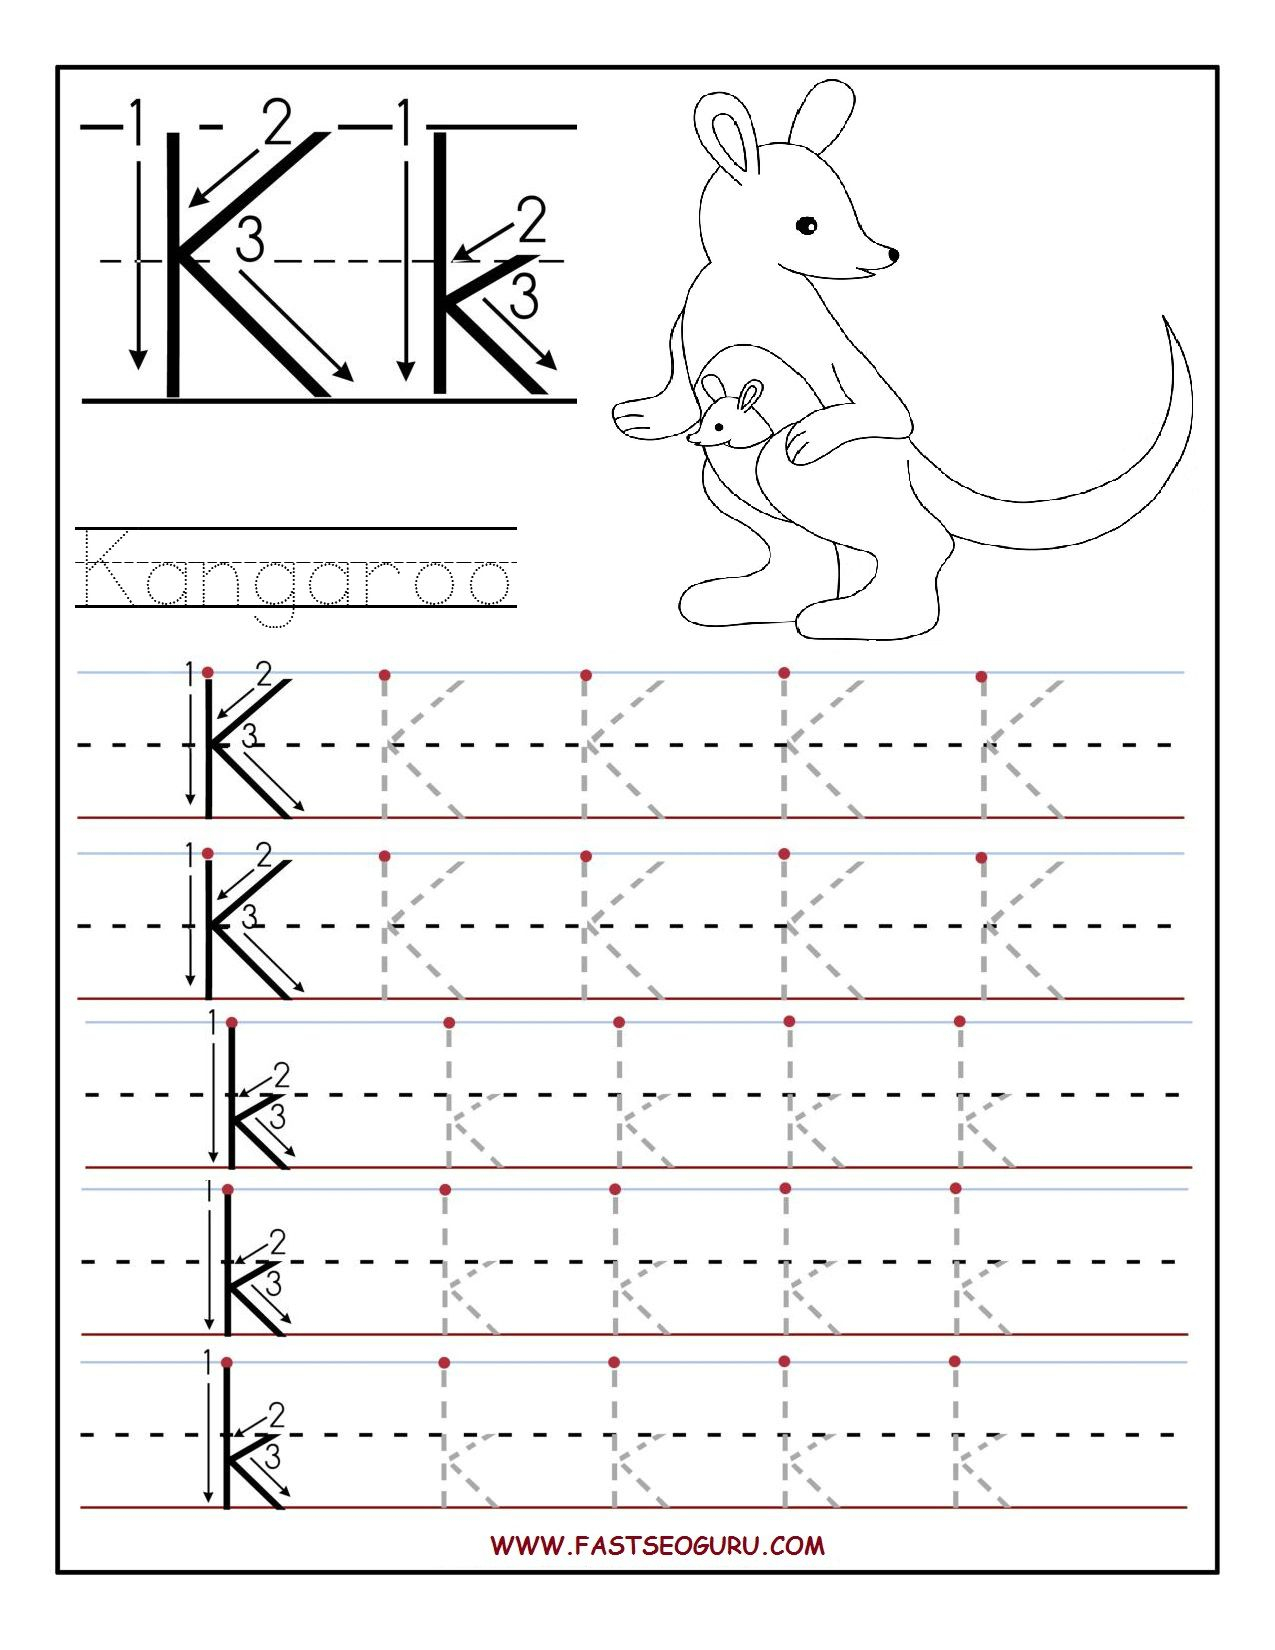 Printable Letter K Tracing Worksheets For Preschool for Letter K Tracing Worksheets Preschool